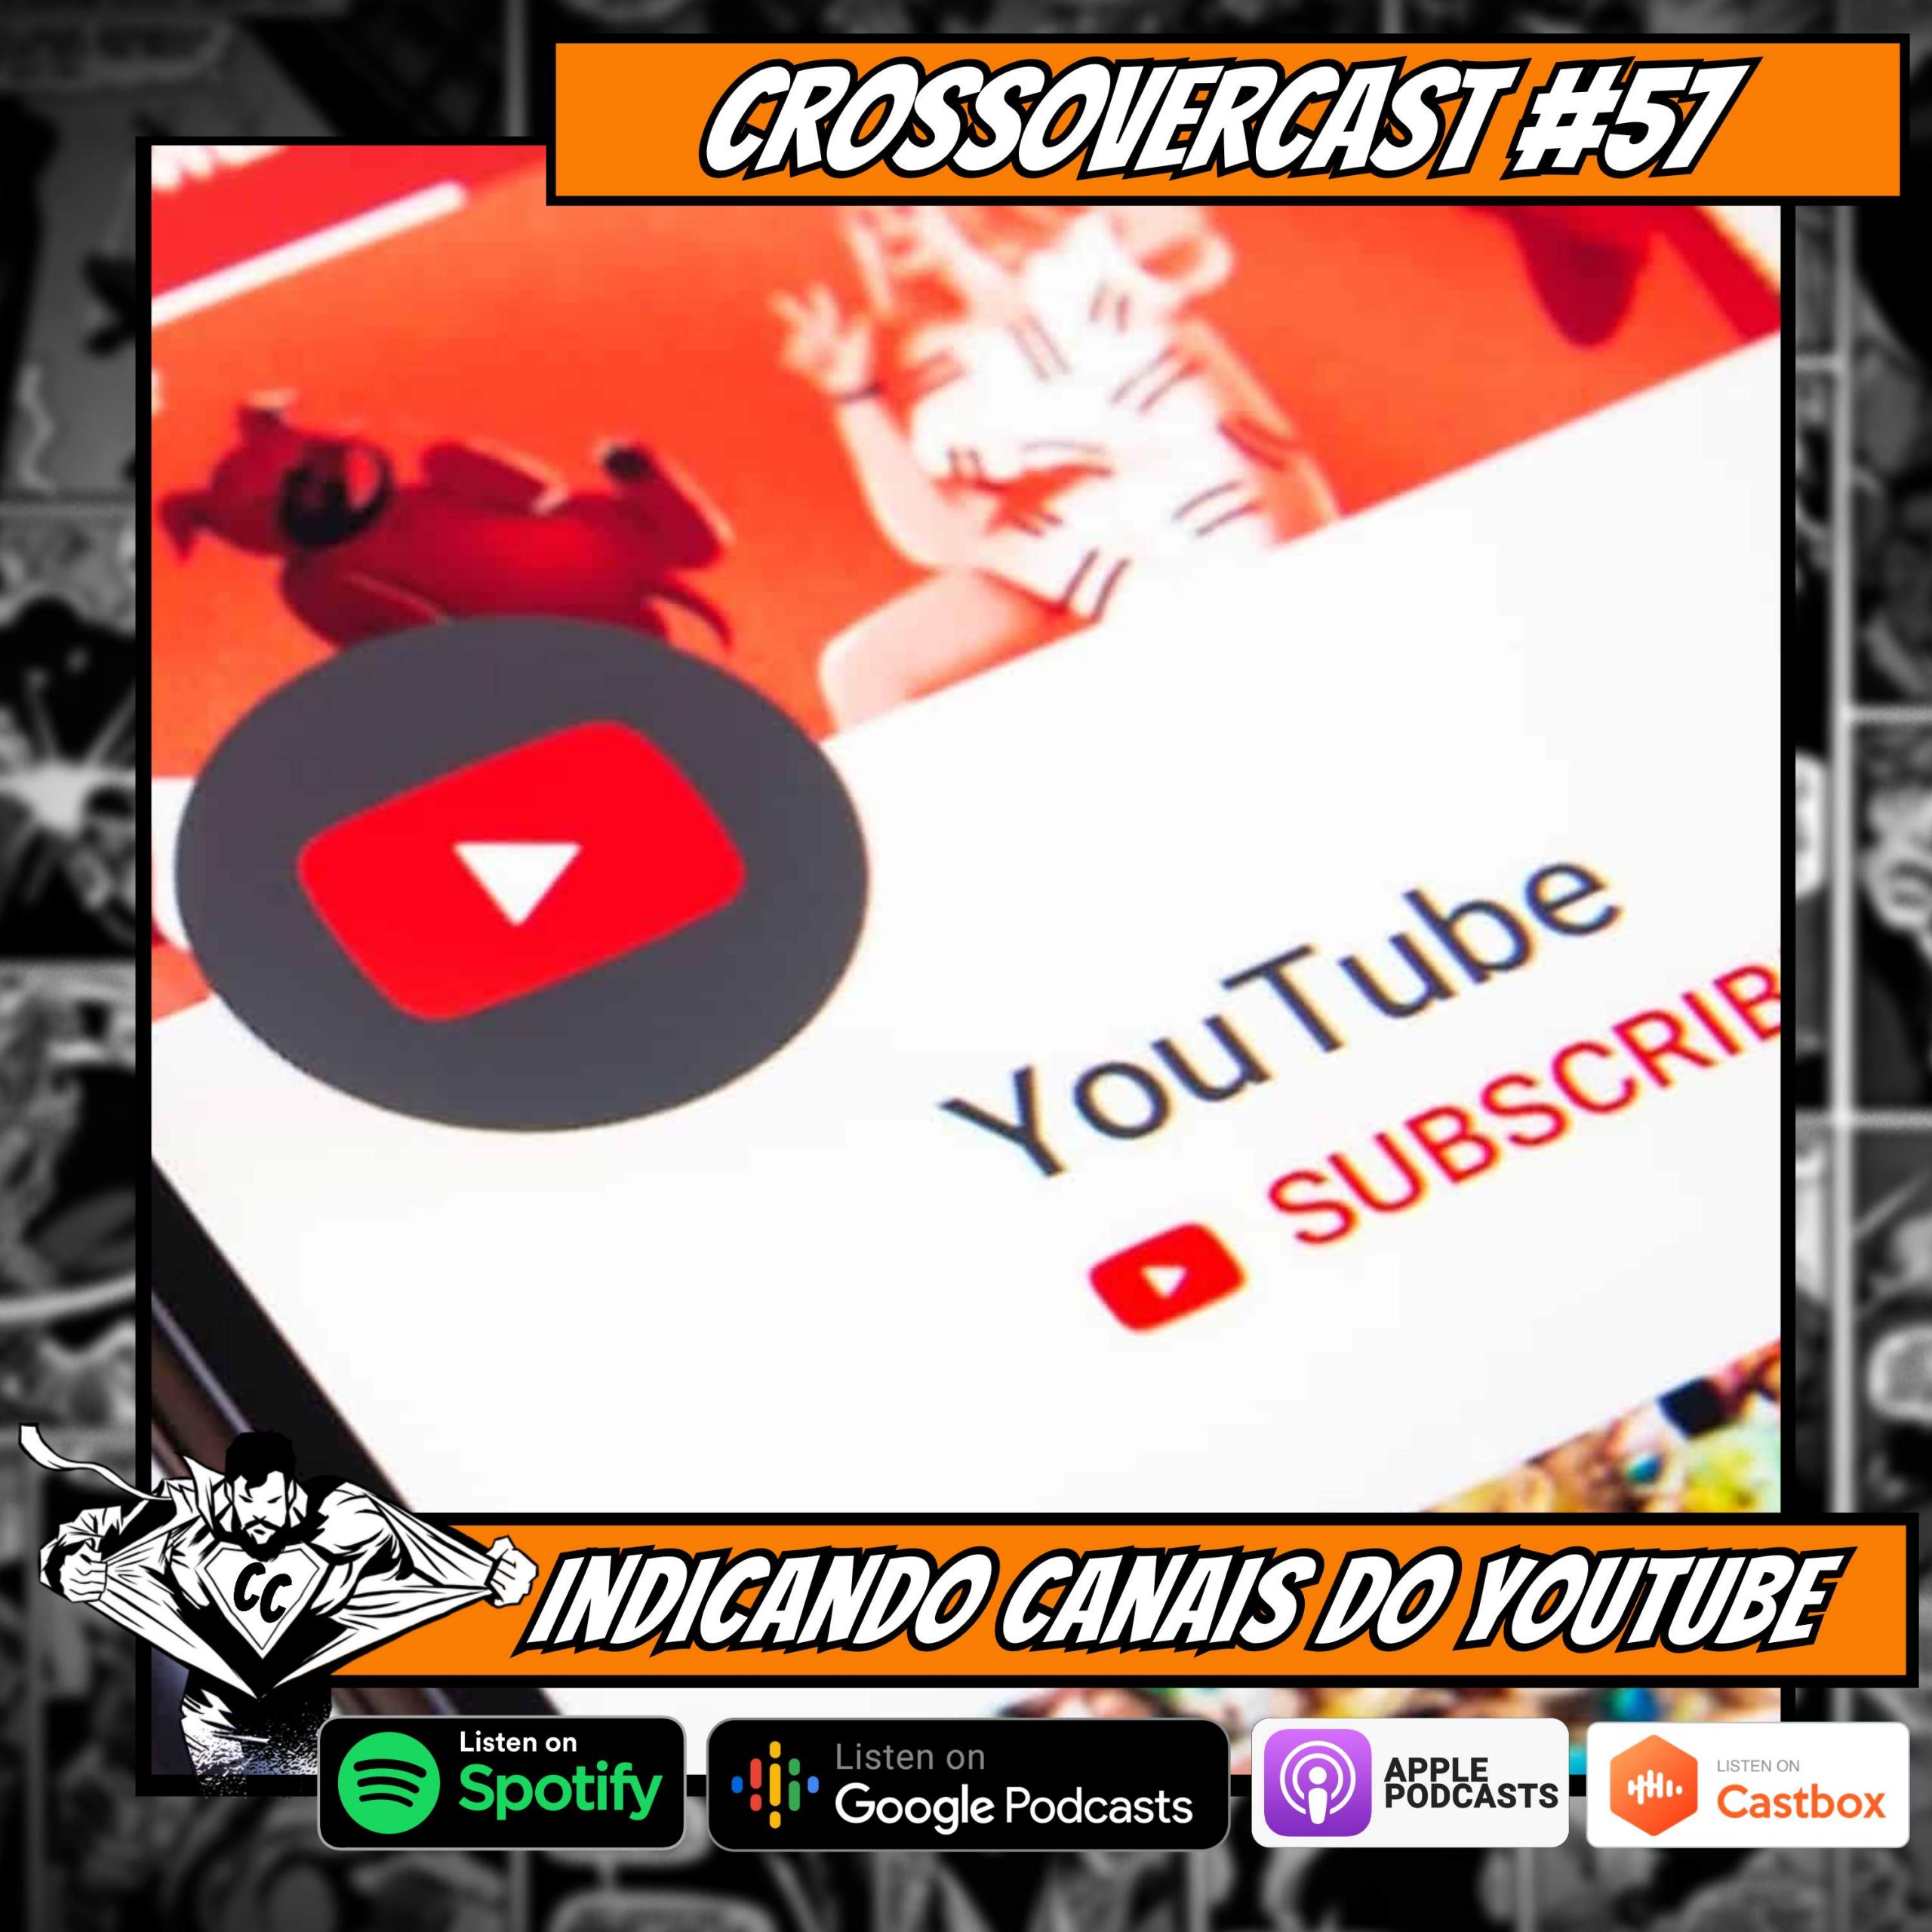 CrossoverCast 57 – Indicando Canais do Youtube